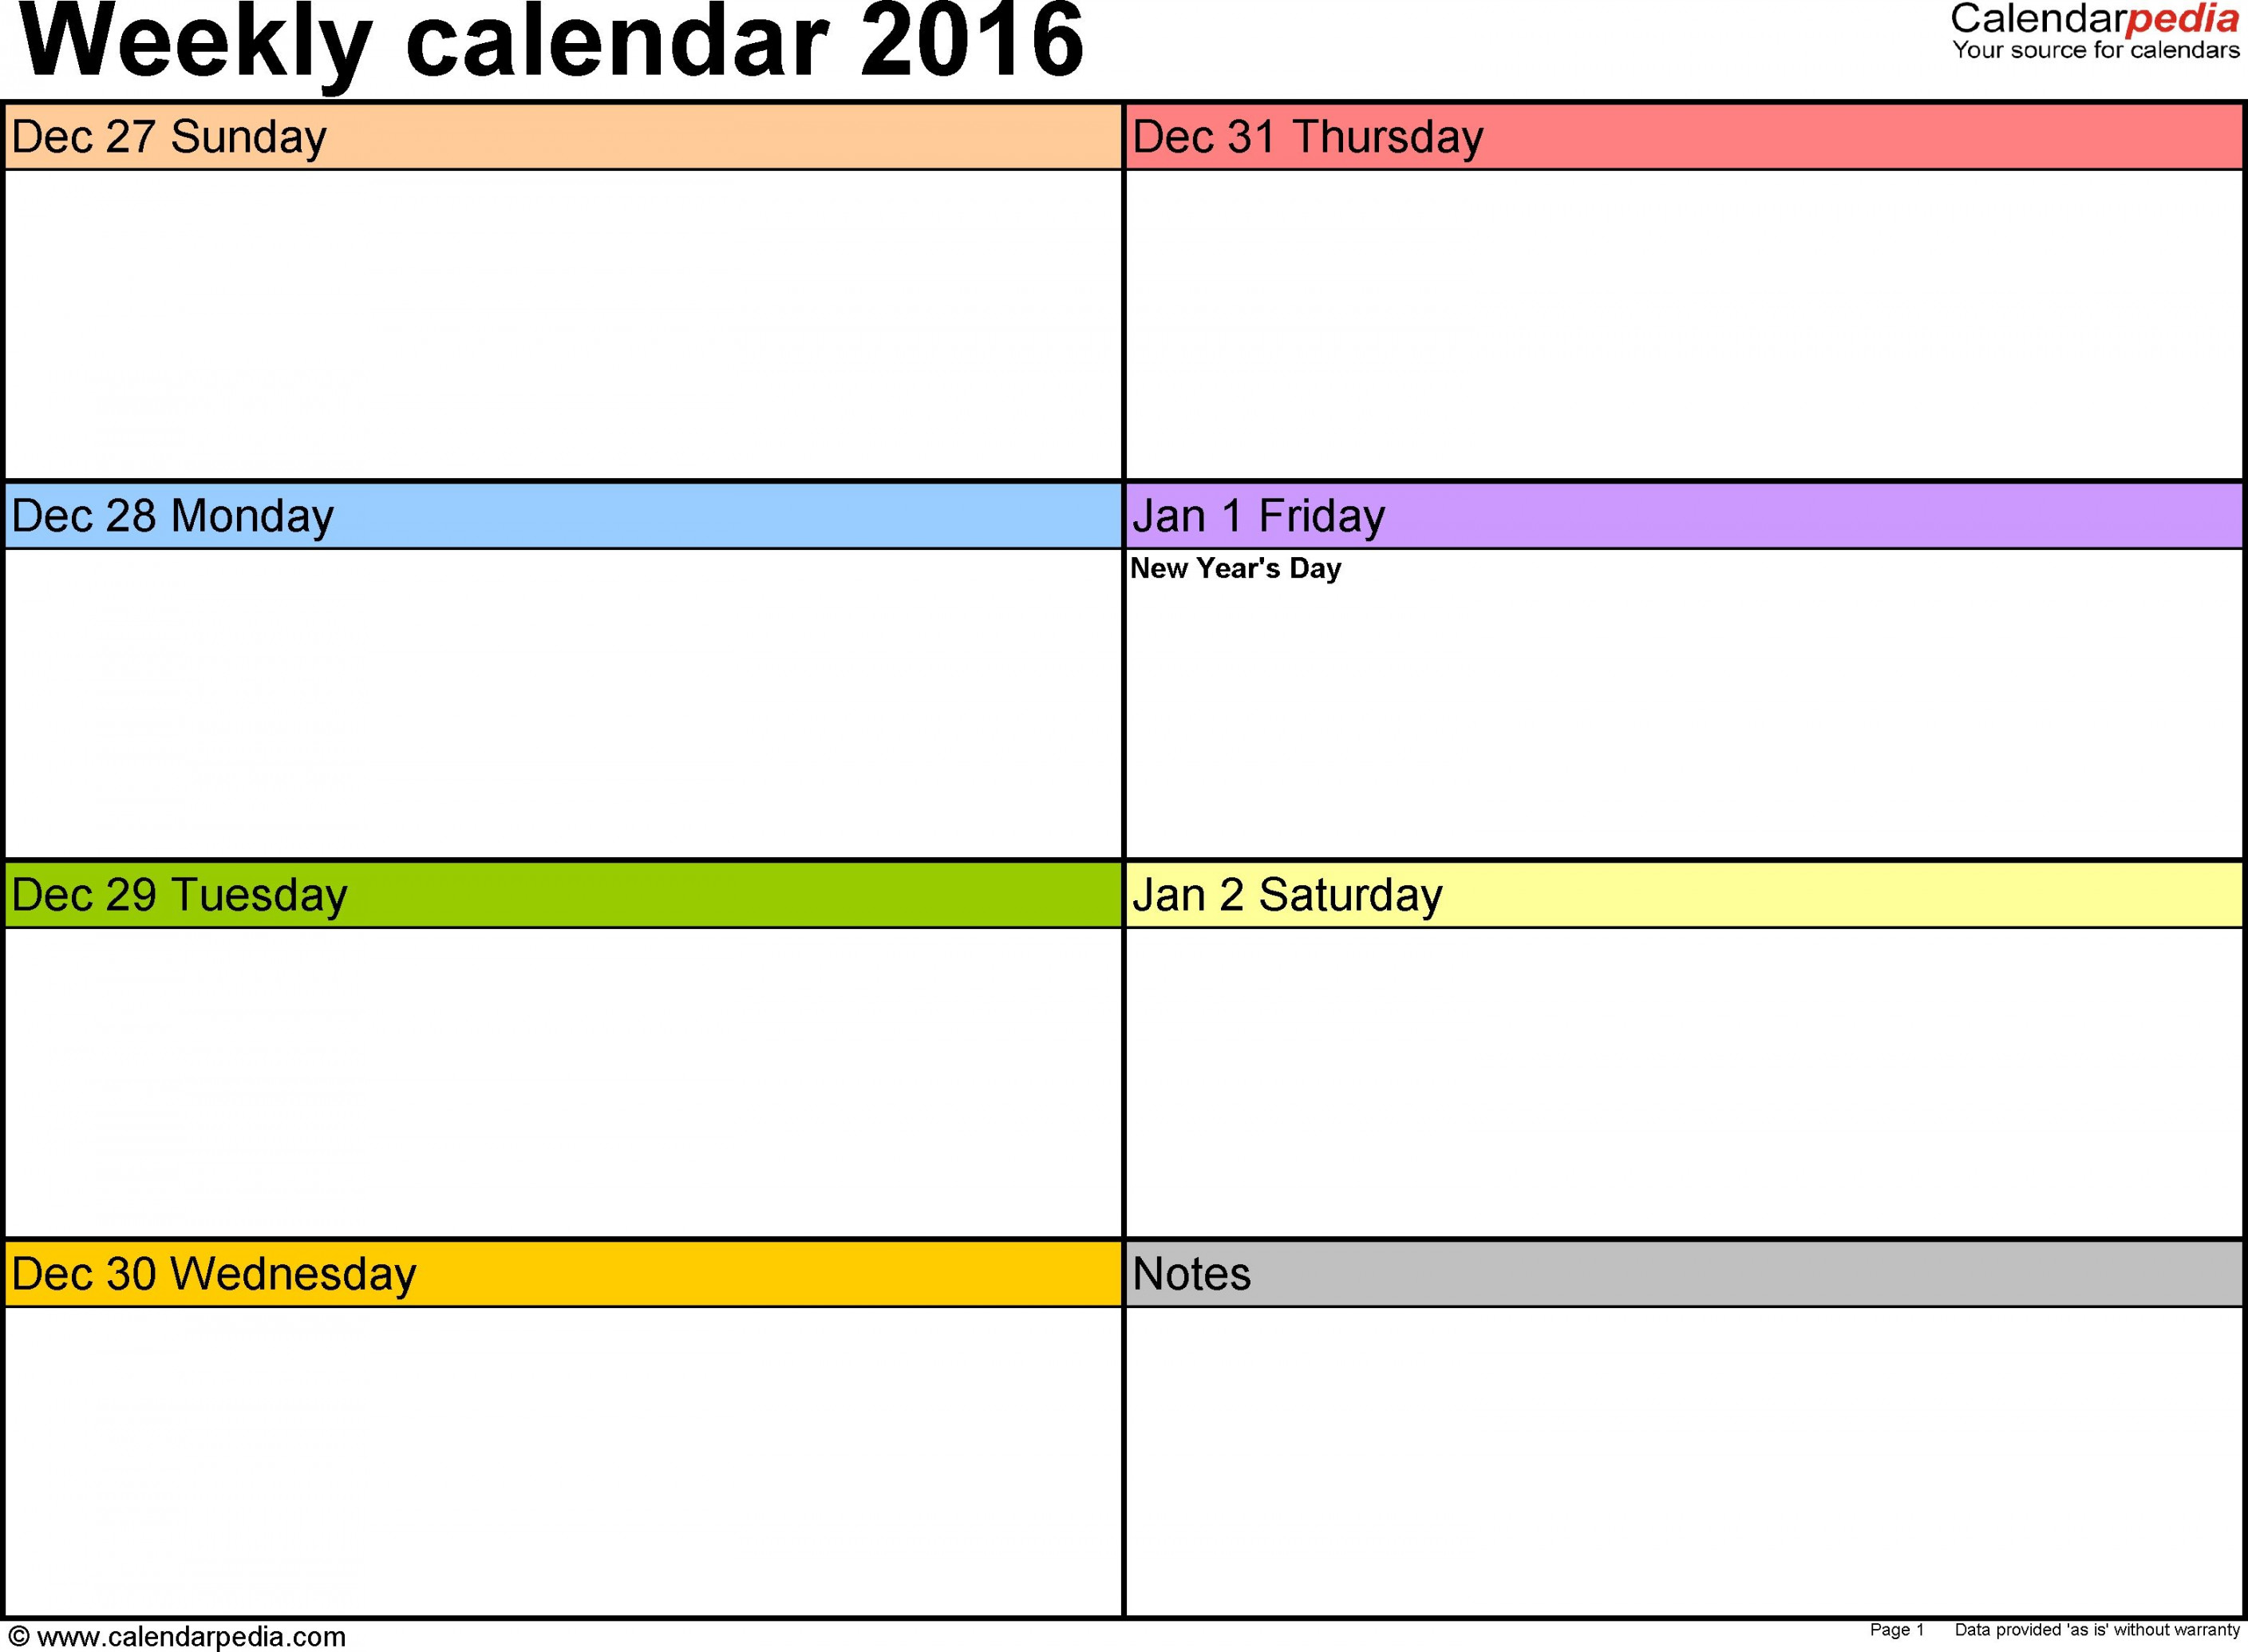 Weekly Calandar Template Starting Monday  Weekly calendar